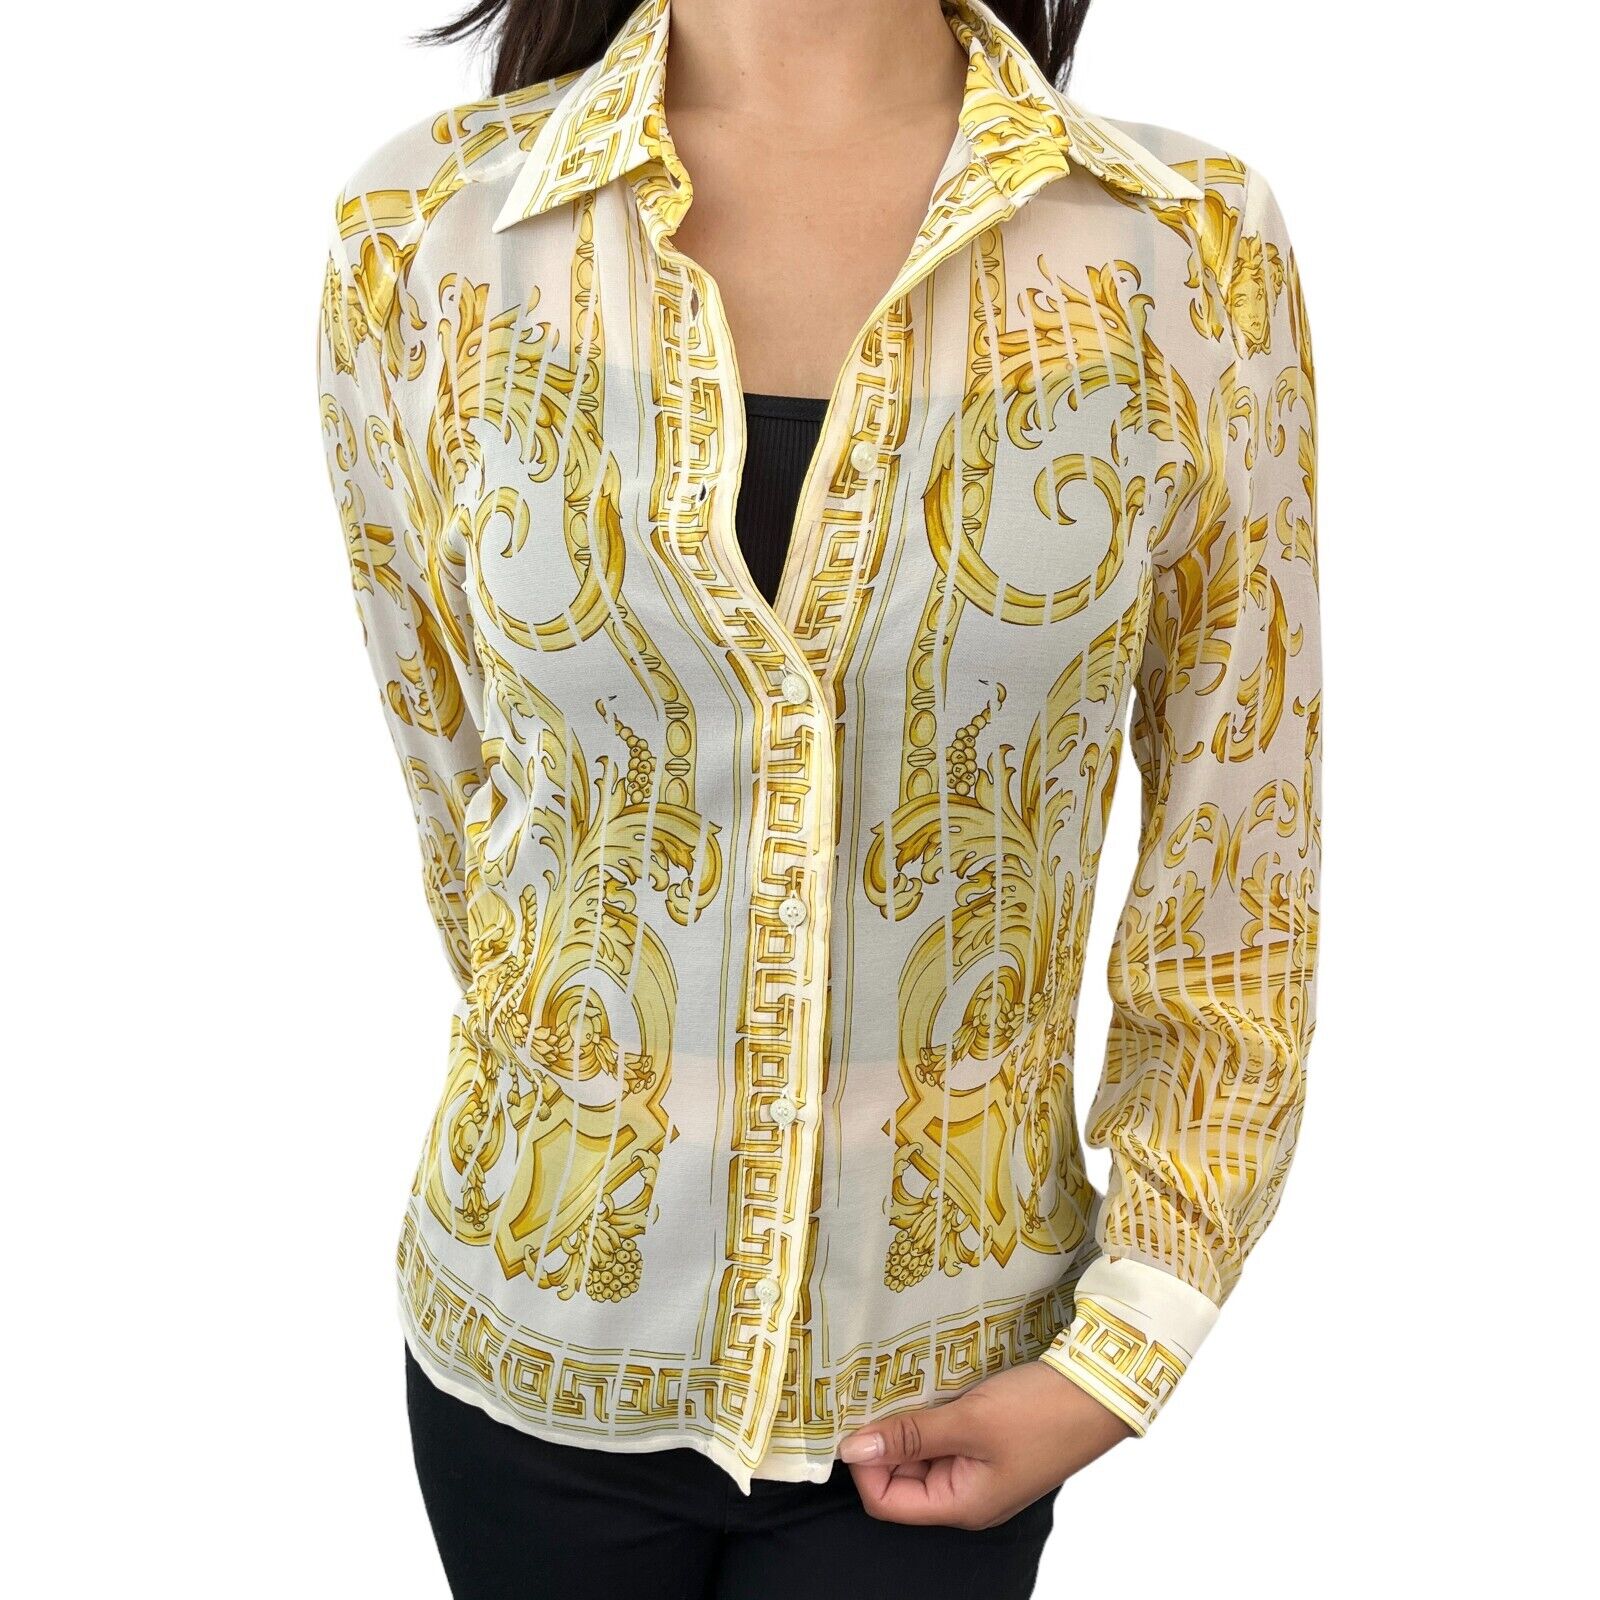 GIANNI VERSACE Vintage Baroque See-through Shirt Top #40 Medusa Gold Rank AB+